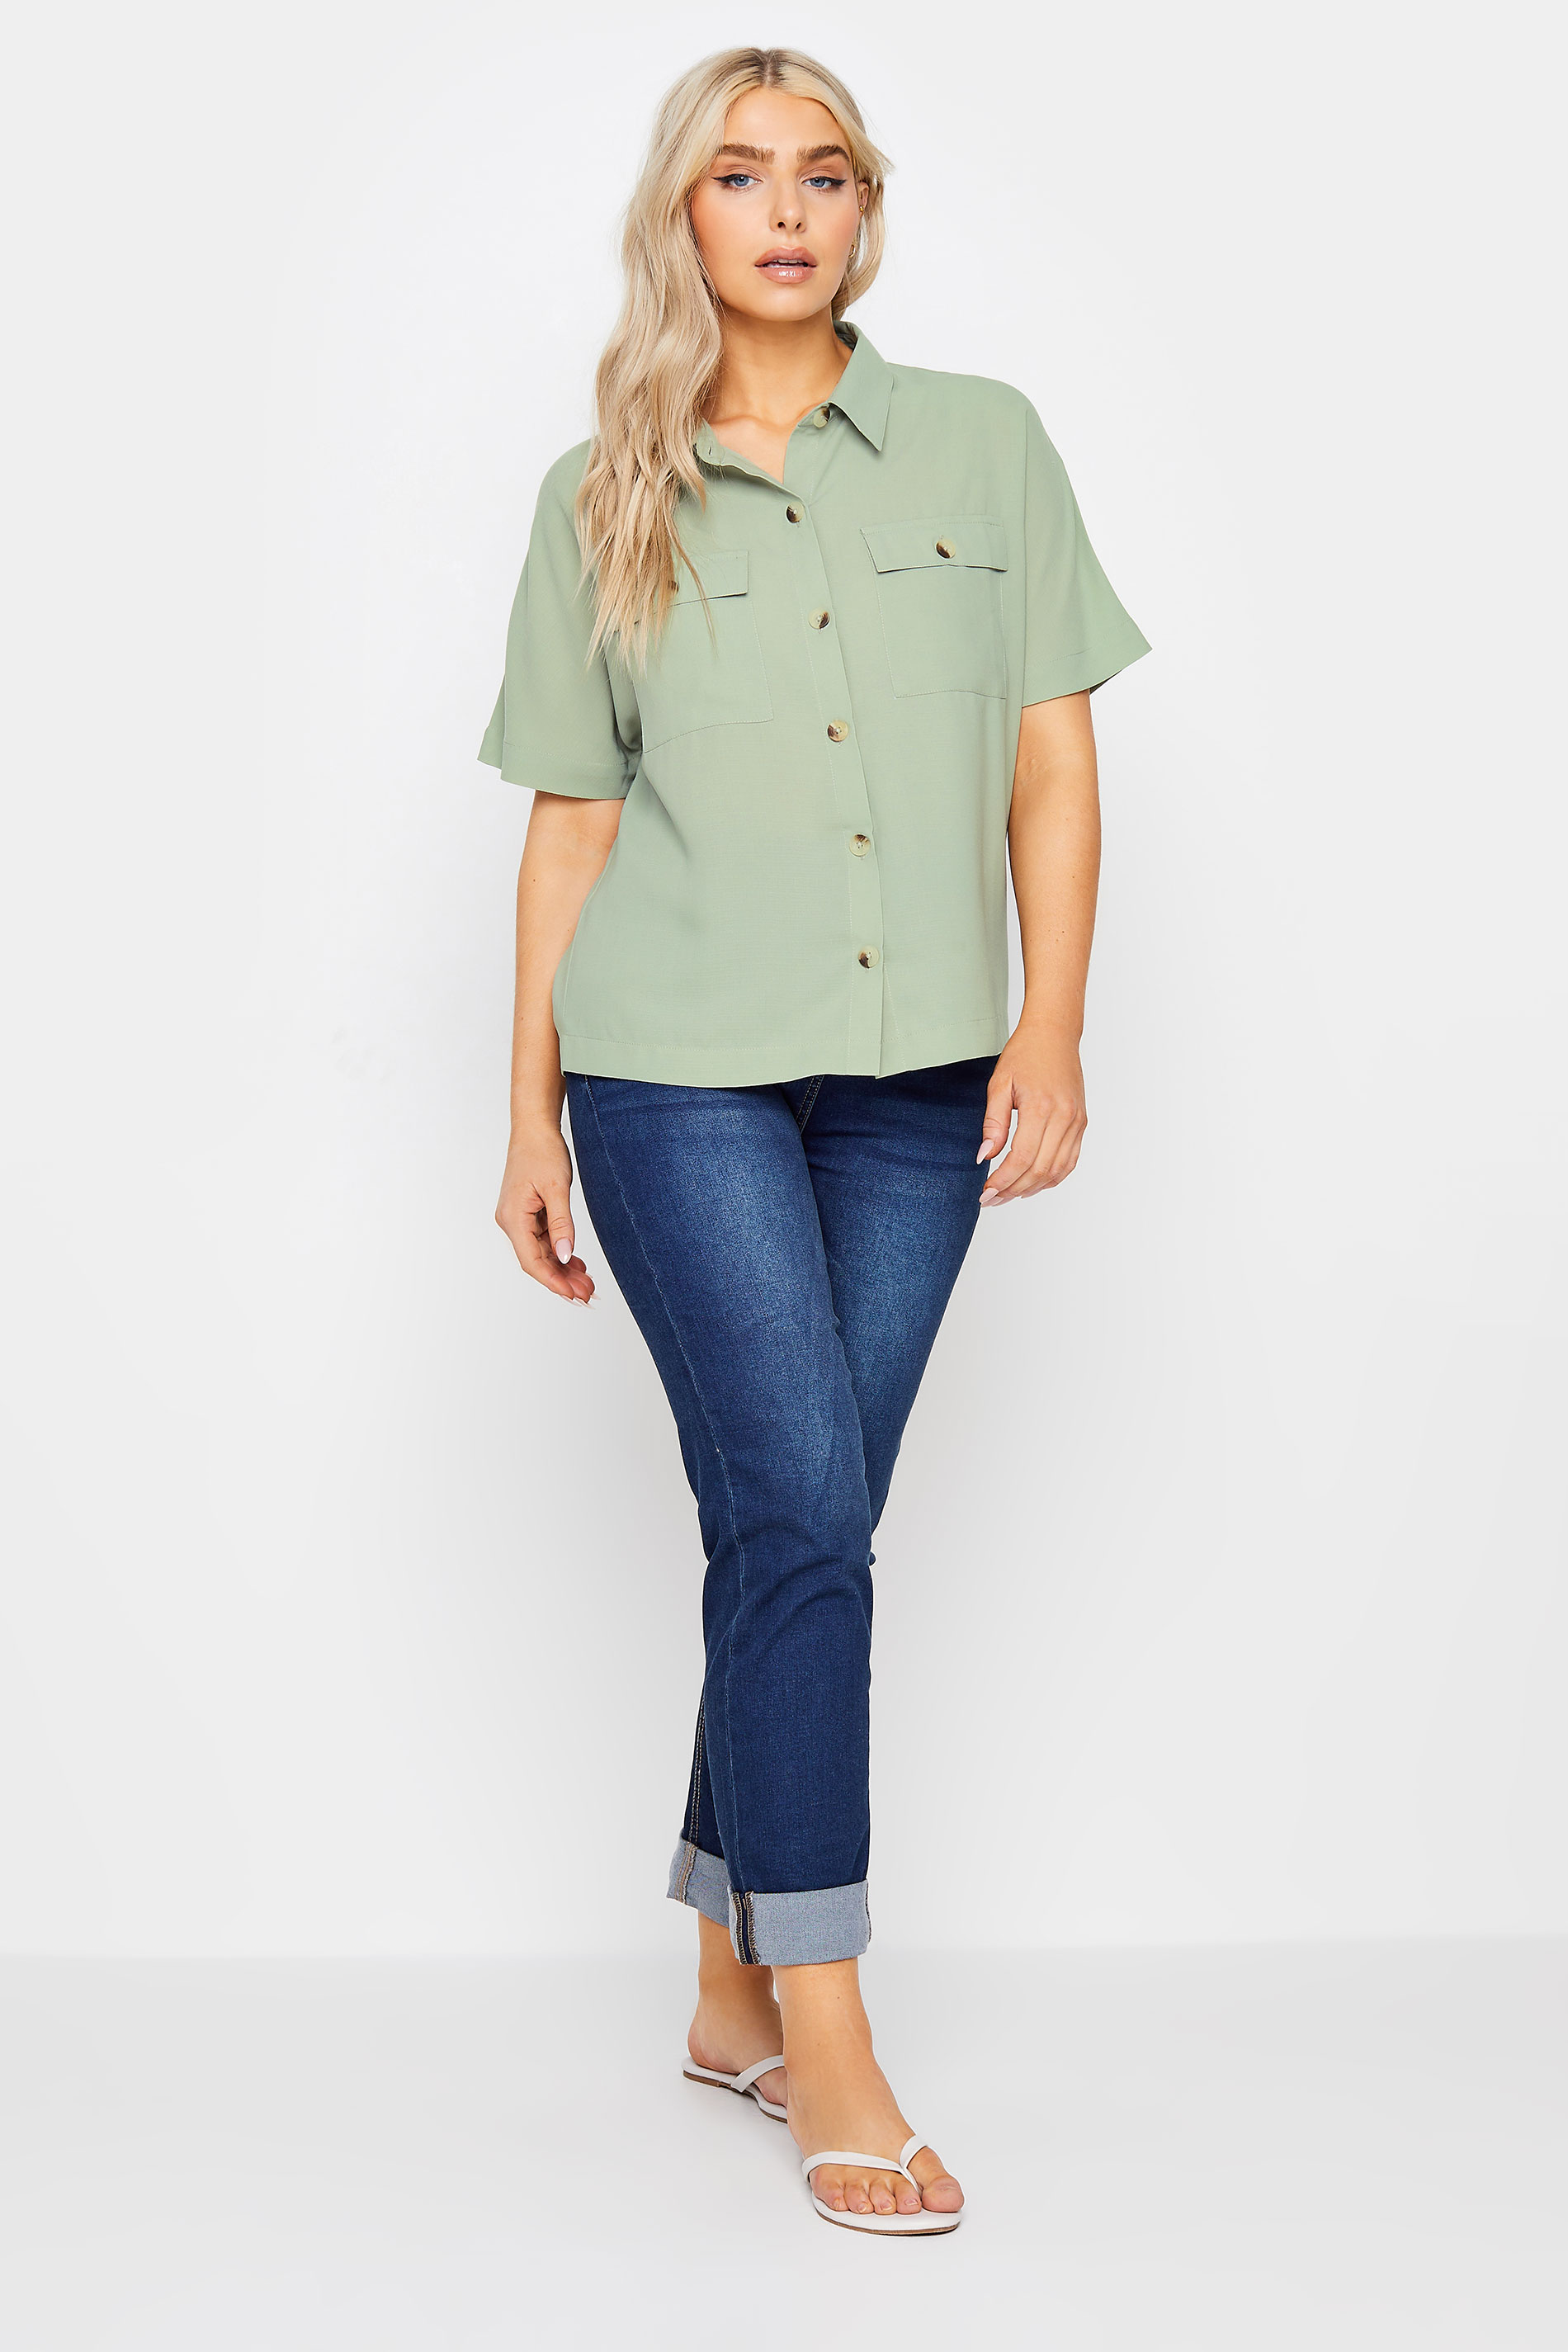 M&Co Sage Green Short Sleeve Utility Shirt | M&Co 3